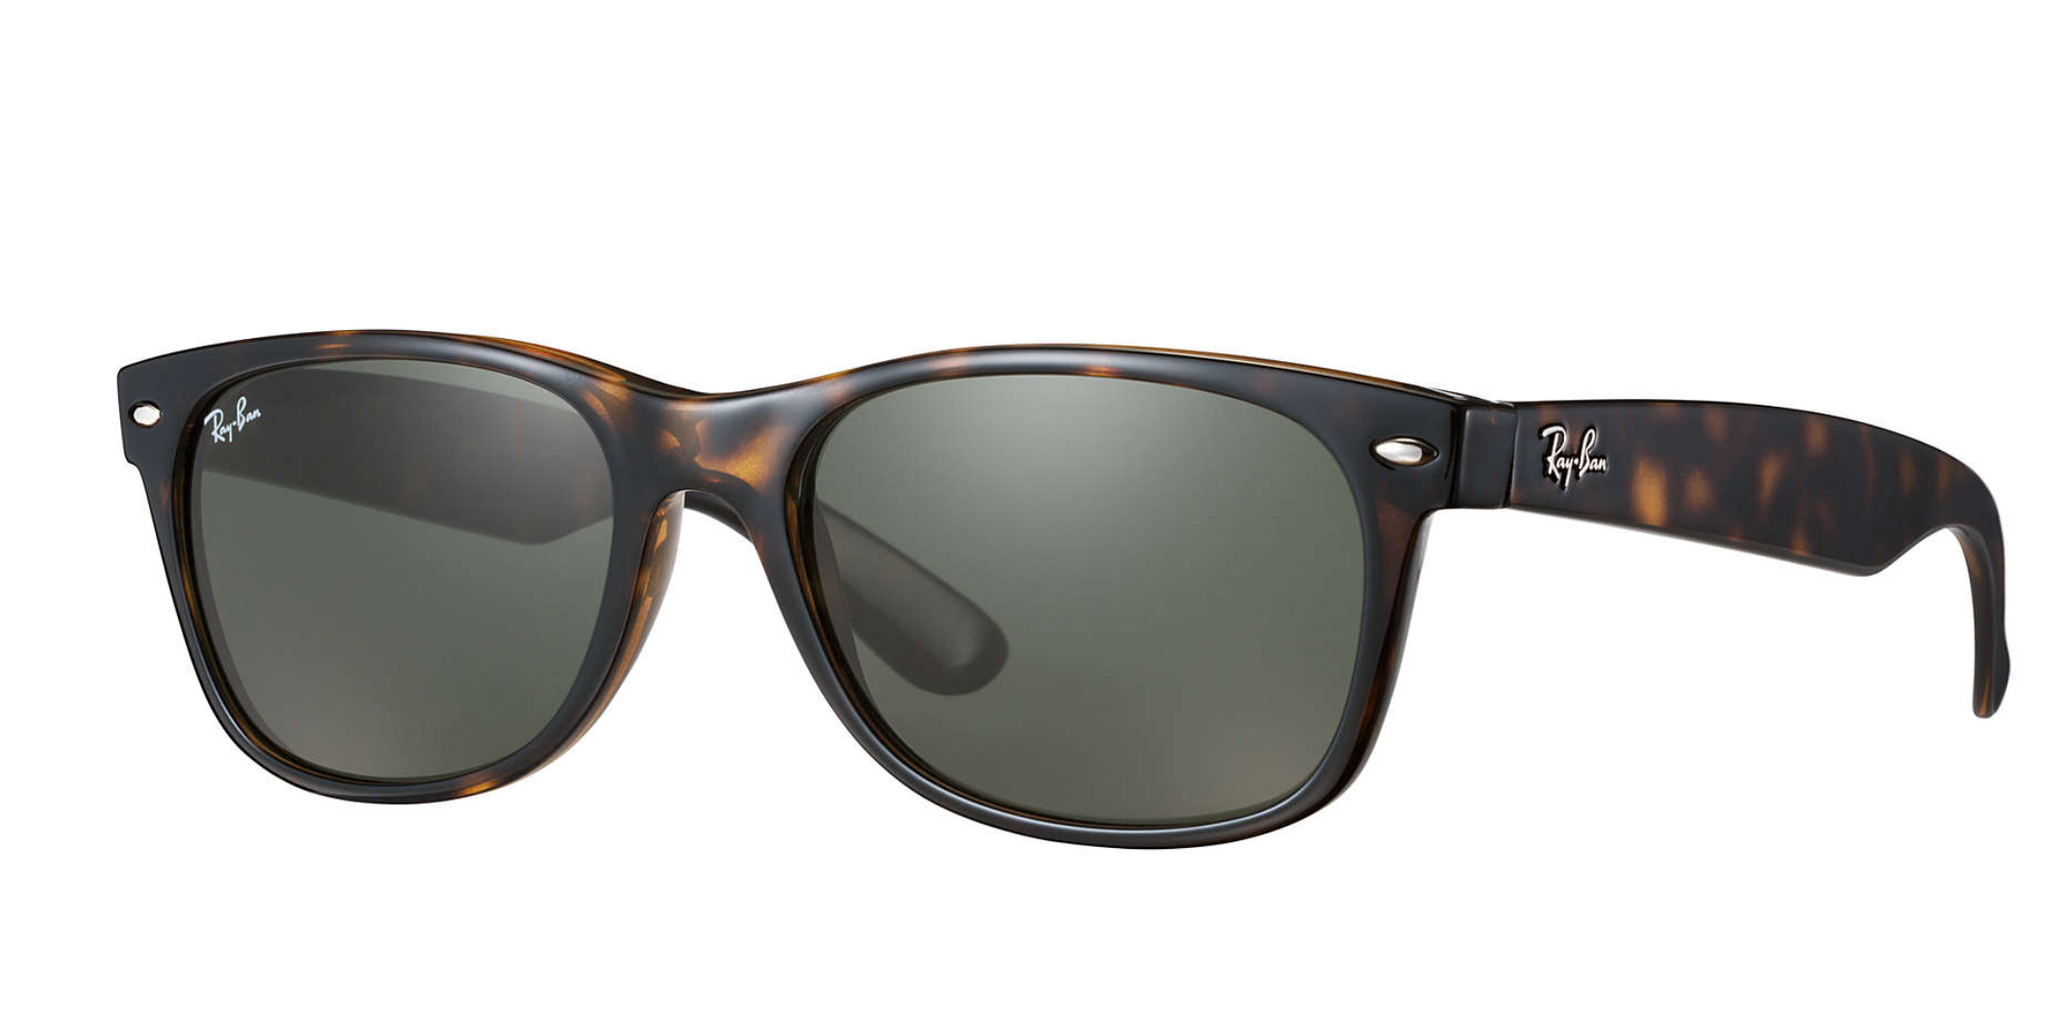 Ray-Ban New Wayfarer Tortoise Sunglasses RB2132 - Flight Sunglasses